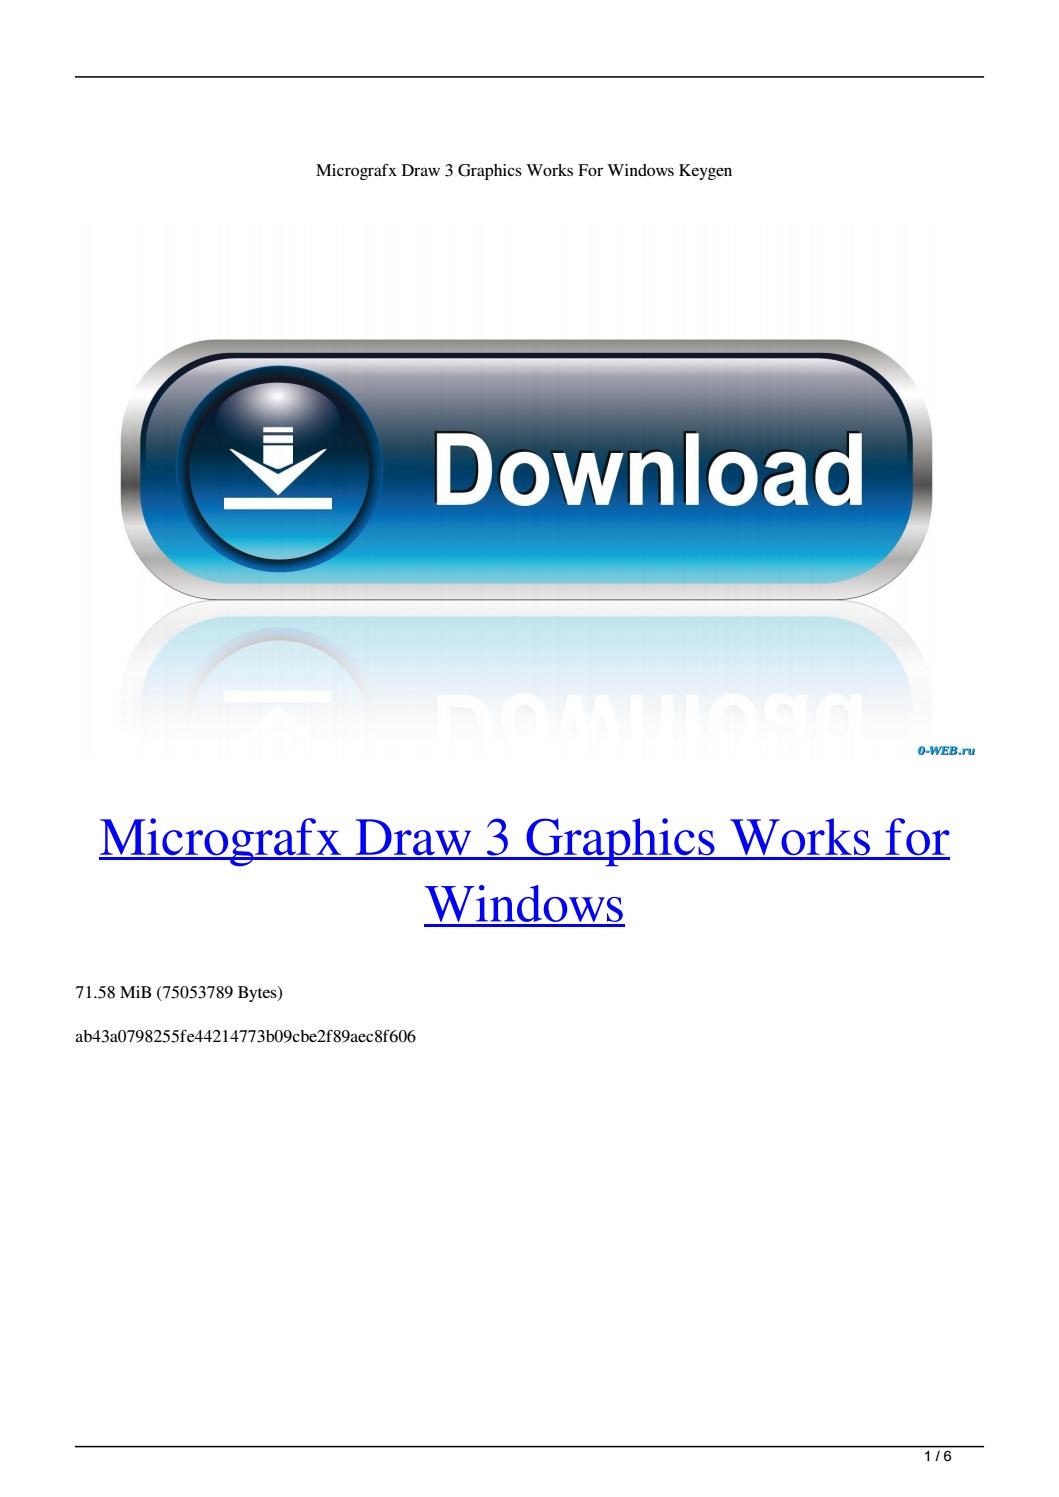 Micrografx Draw 6 Free Download - yelloweq